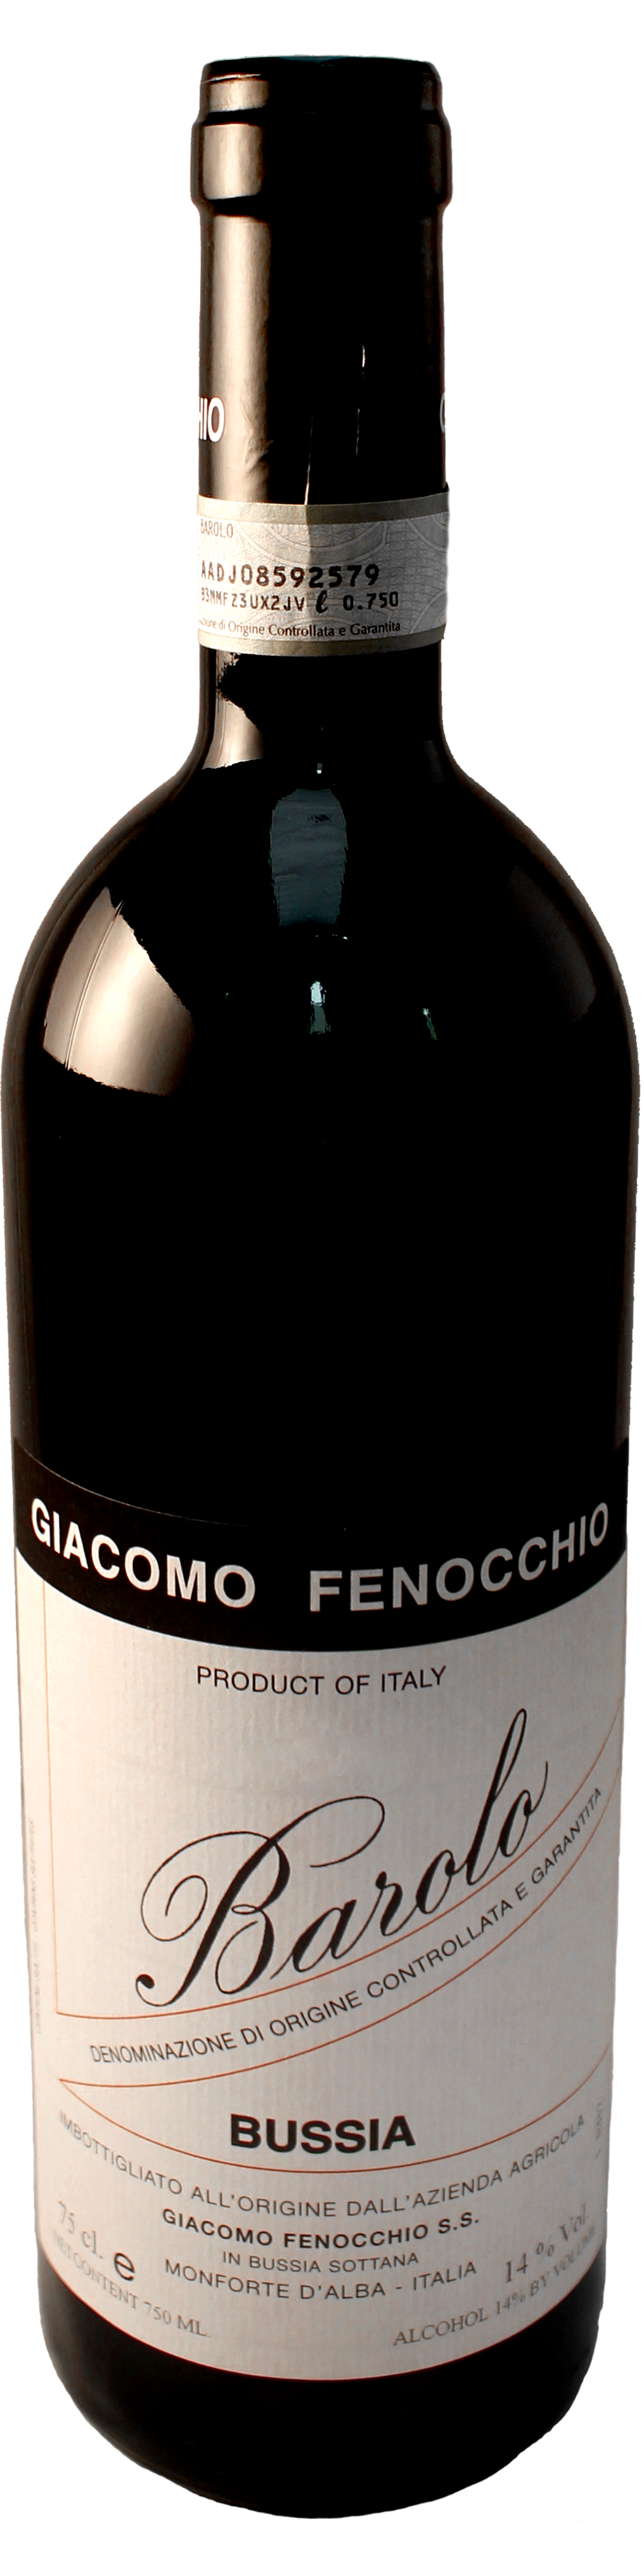 Bottle shot of 2011 Barolo Bussia